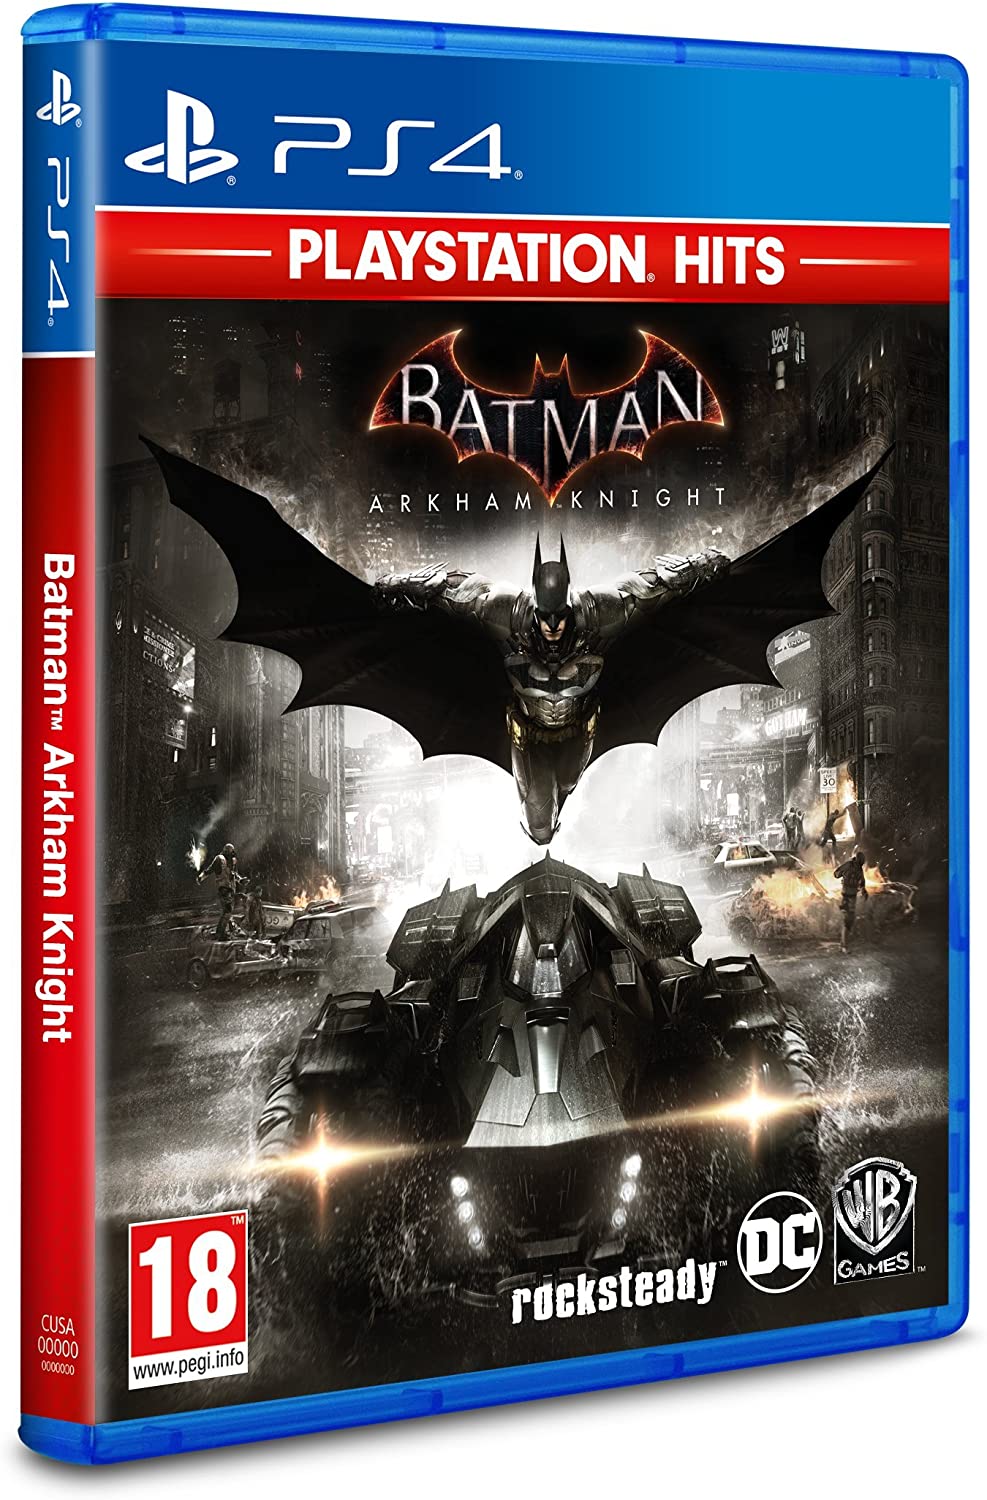 Batman Arkham Knight Video Game - PlayStation Hits (PS4)